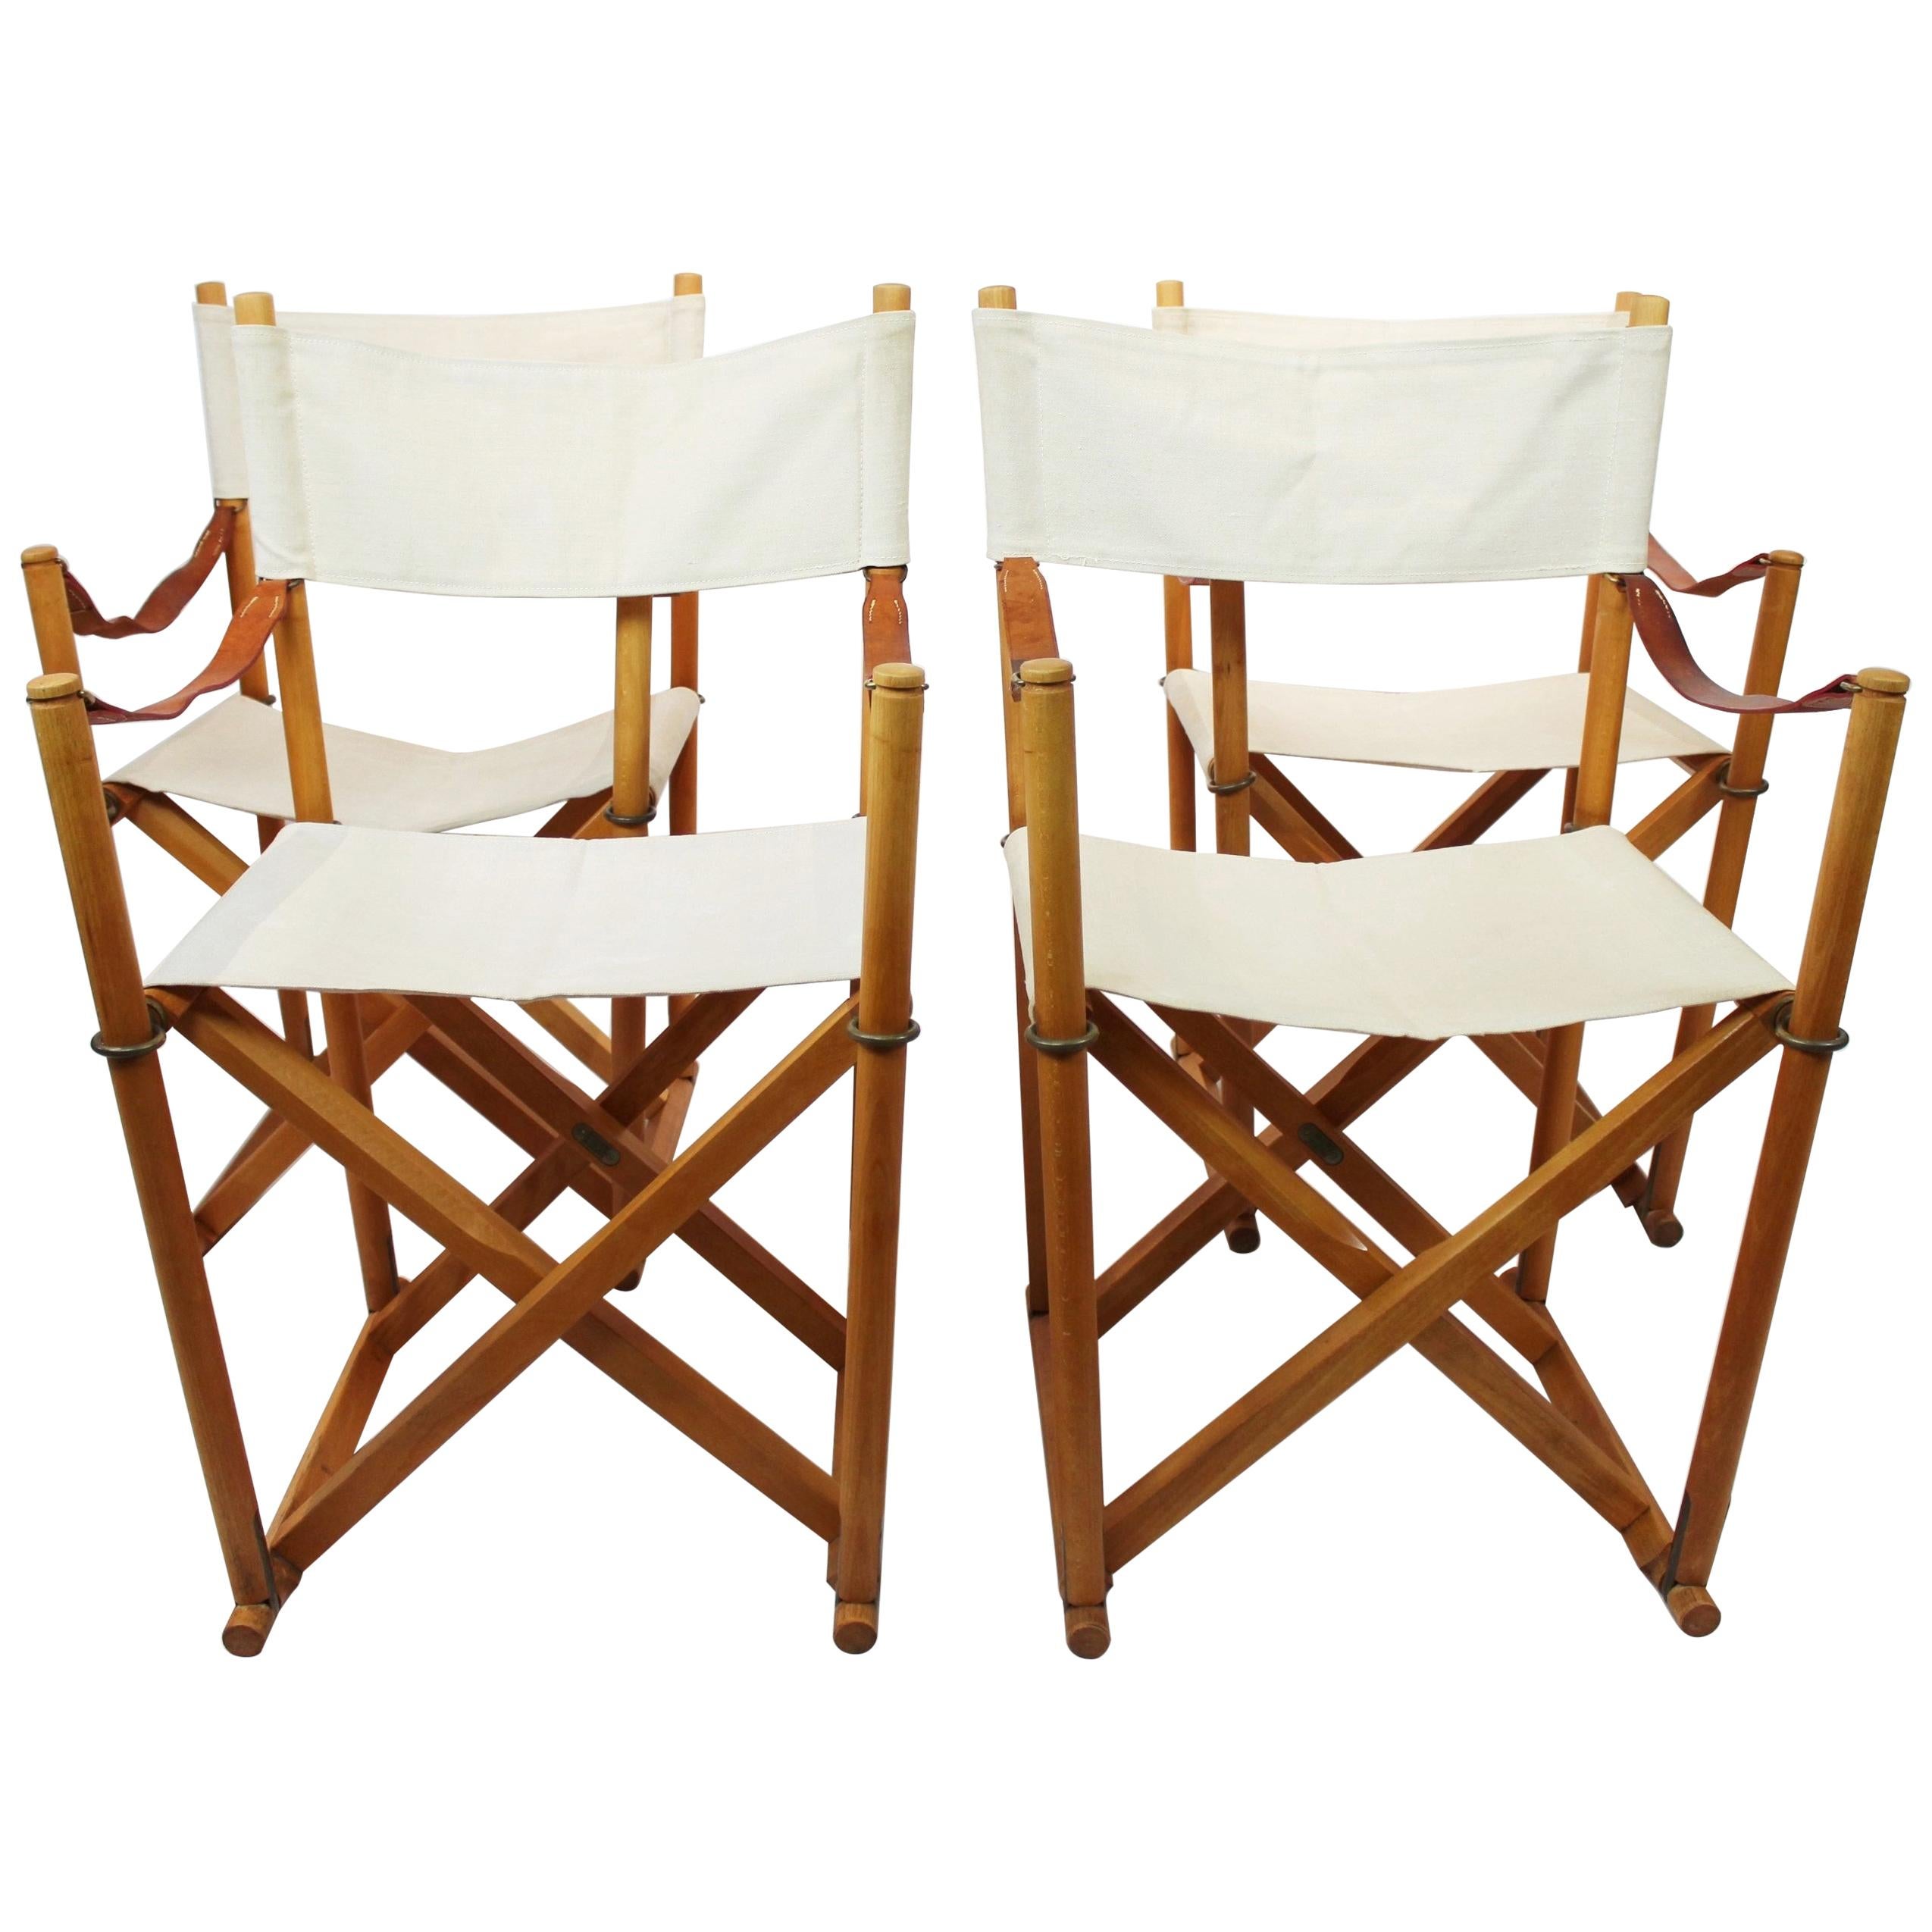 Set of Four Folding Chairs, Model MK99200, Designed by Mogens Koch